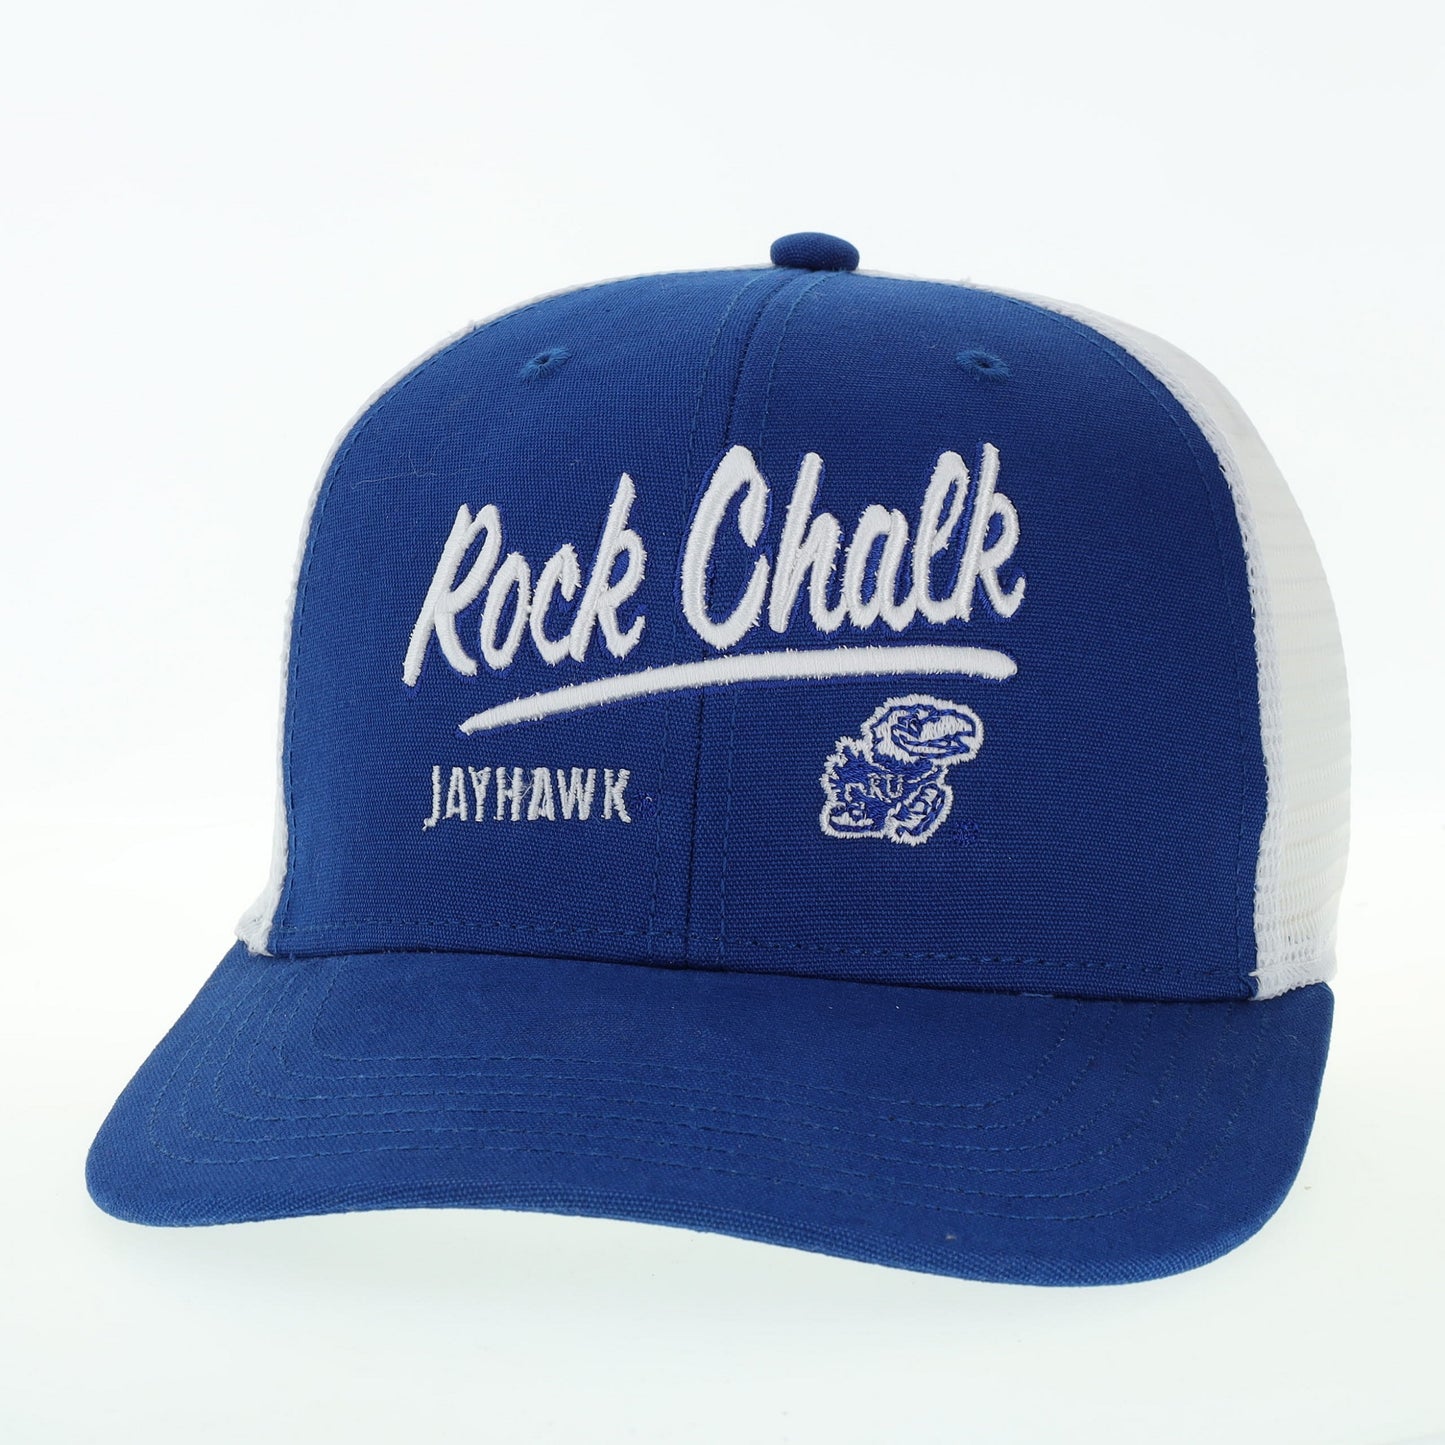 Kansas Jayhawks Rock Chalk Jayhawk Adjustable Trucker Hat - Blue/White